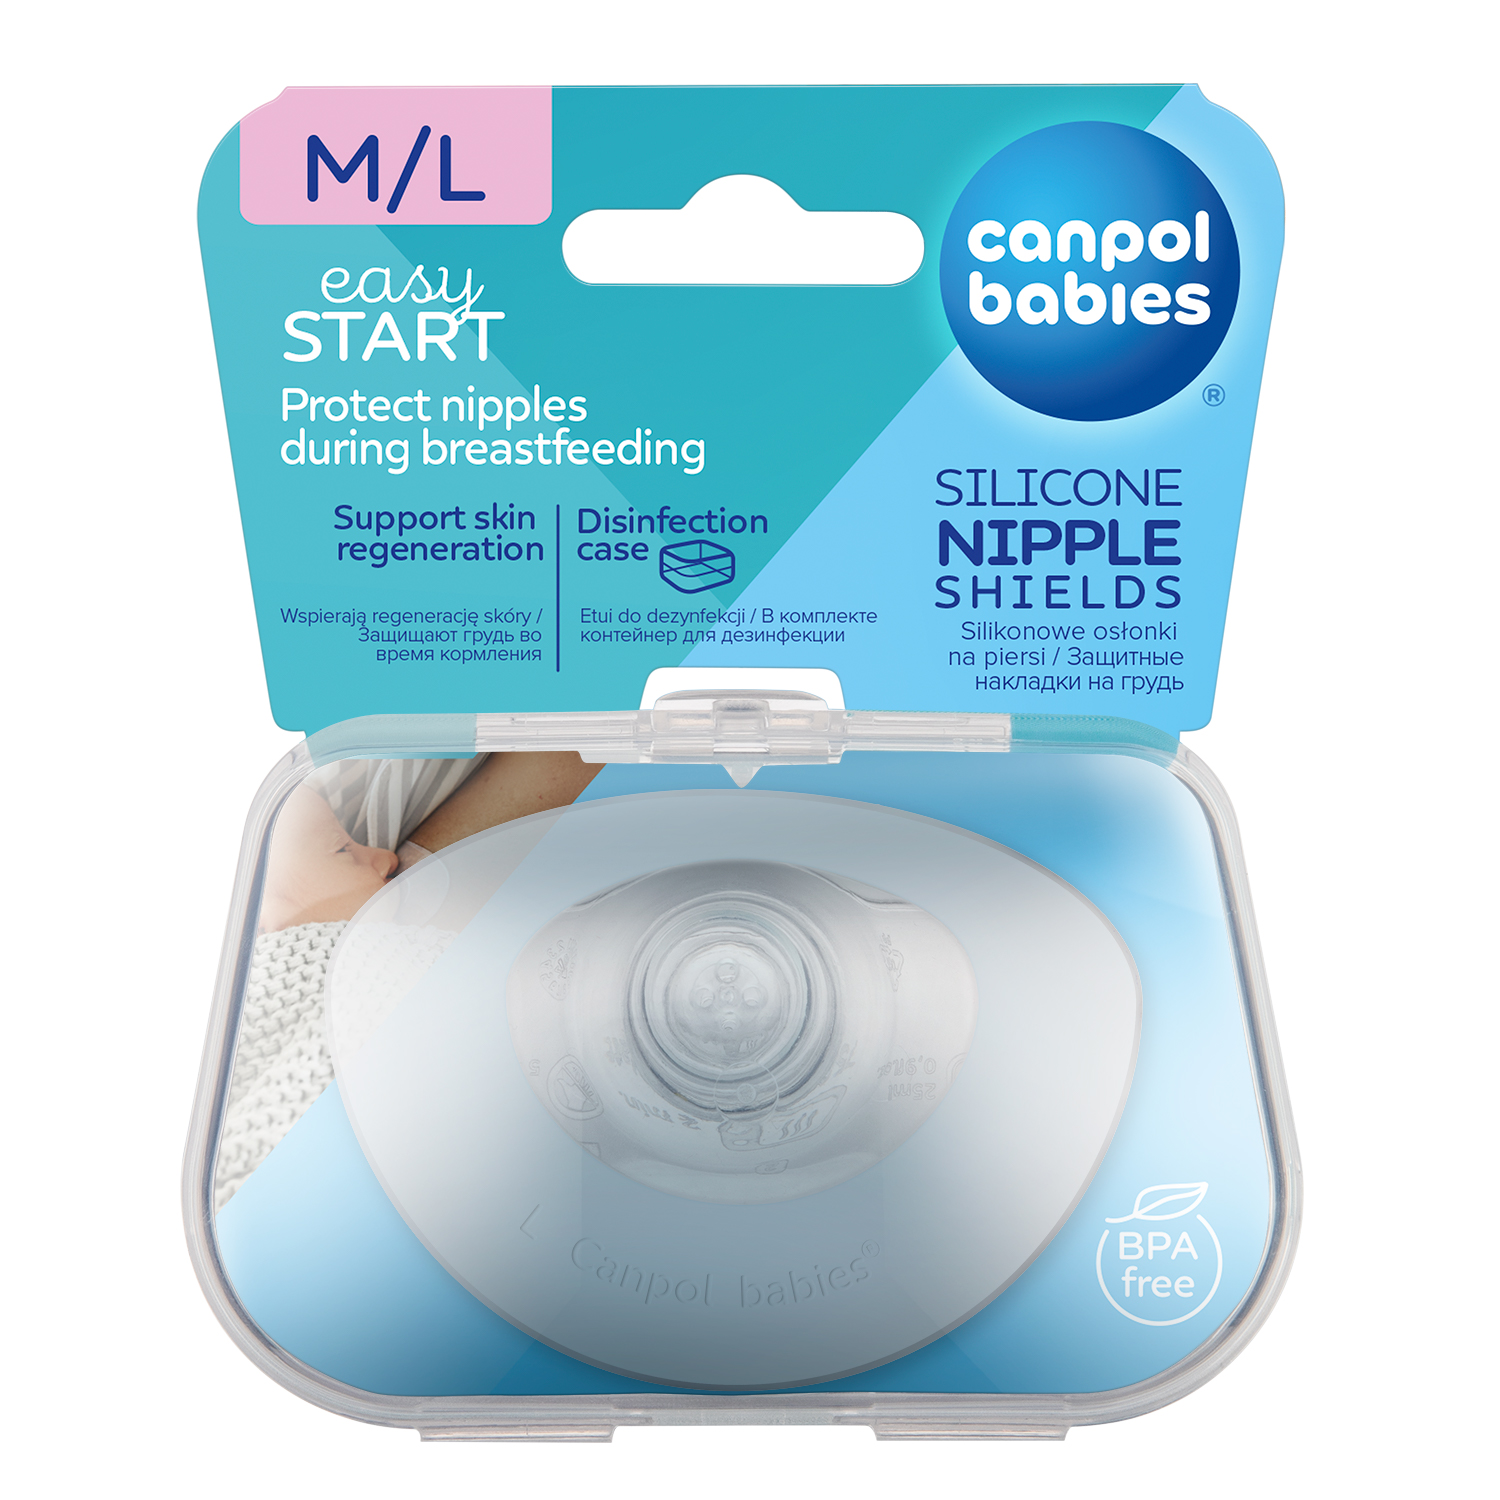 https://canpolbabies.com/eCatalog/canpol/breastfeeding/accessories/18-603-new/18-603_pack_front.jpg